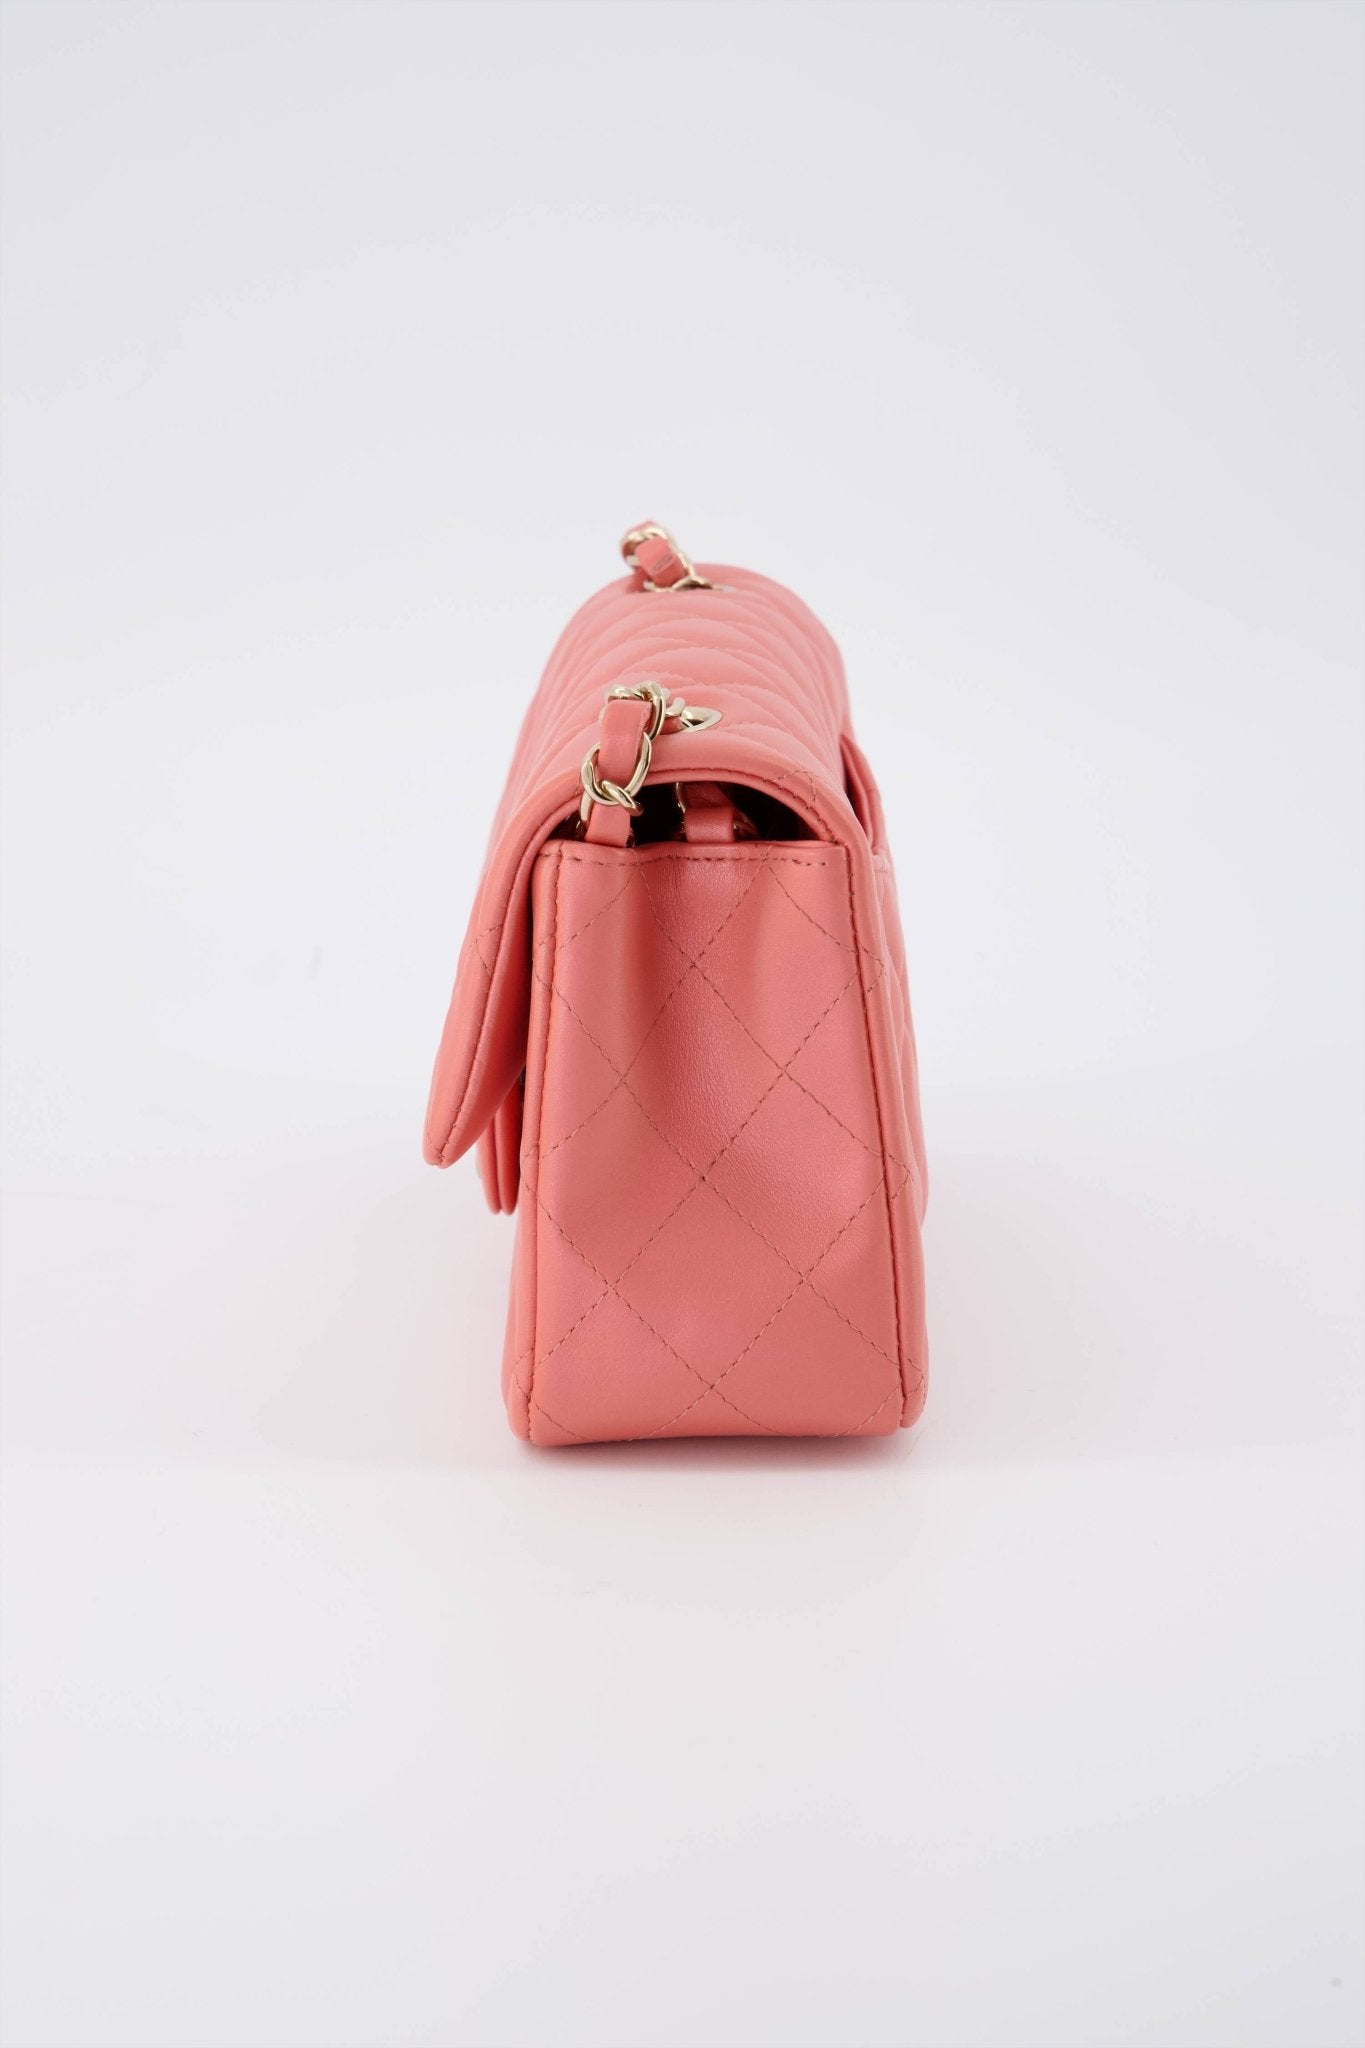 Chanel Mini Rectangular Flap Bag Pink Colour Lambskin with